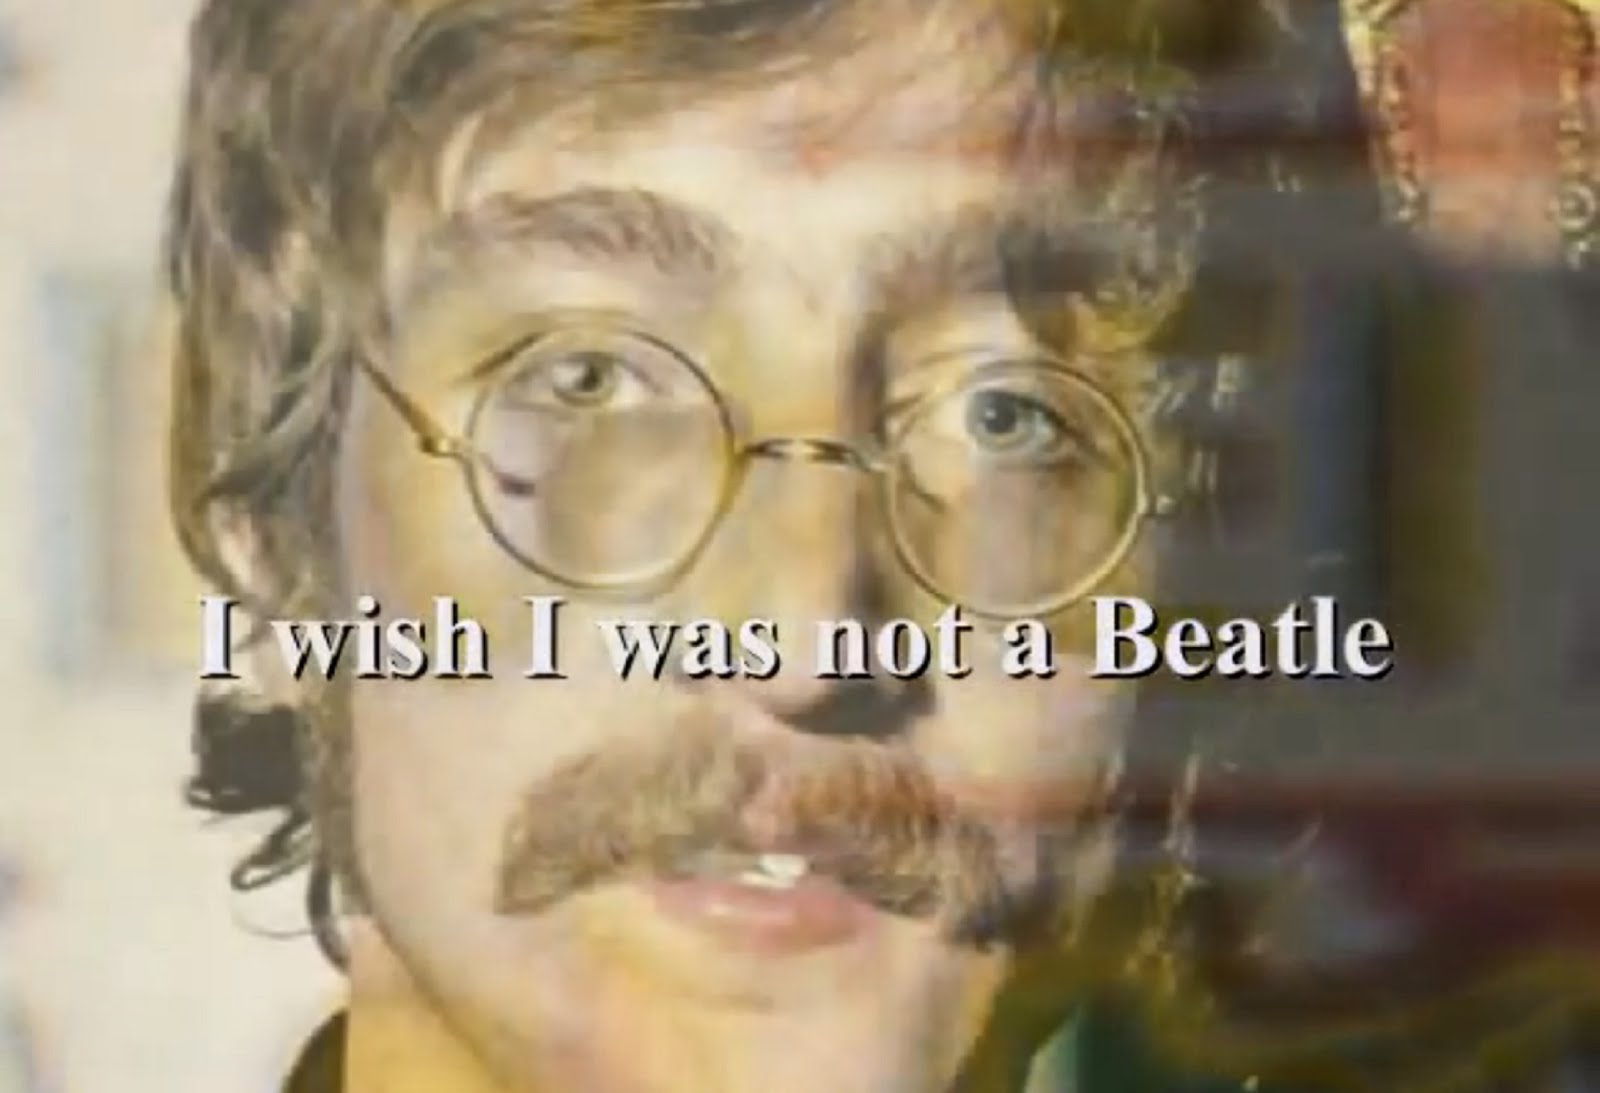 BEATLE JOHN LENNON  "I WISHED I  WAS NOT A BEATLE"